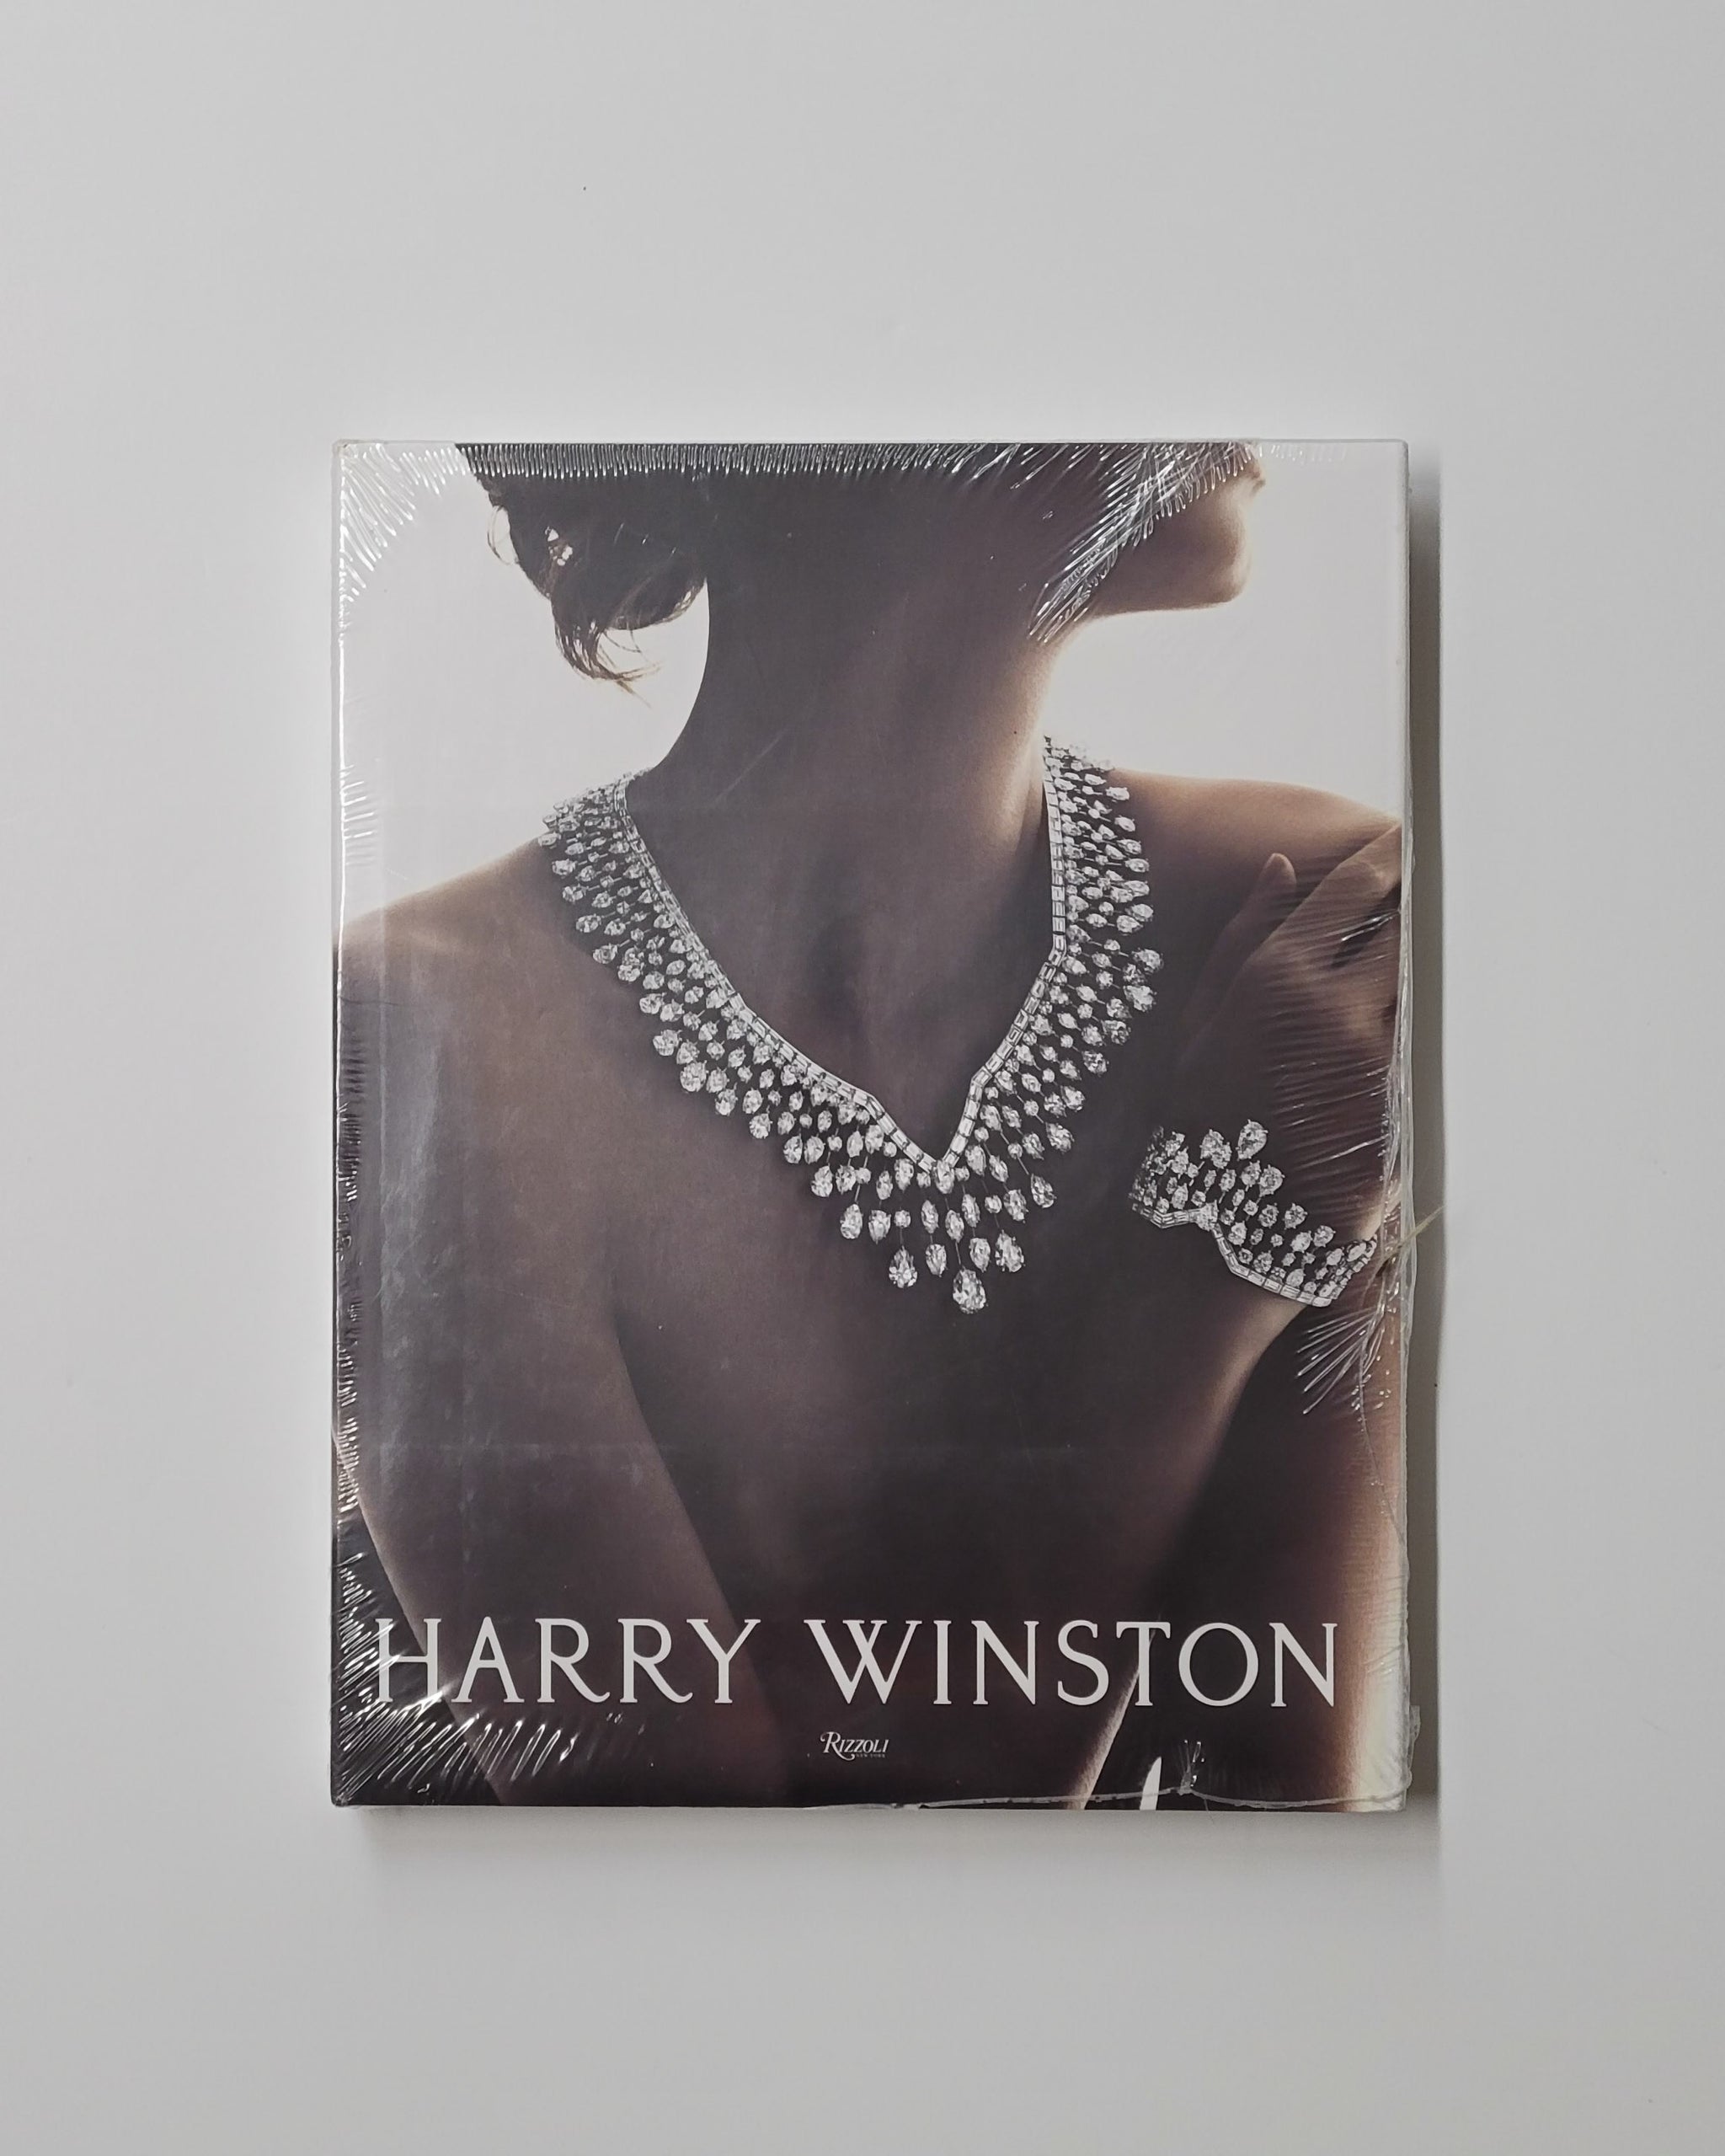 Harry Winston by Harry Winston u0026 Andre Leon Talley | D u0026 E LAKE LTD. – D u0026  E Lake Ltd